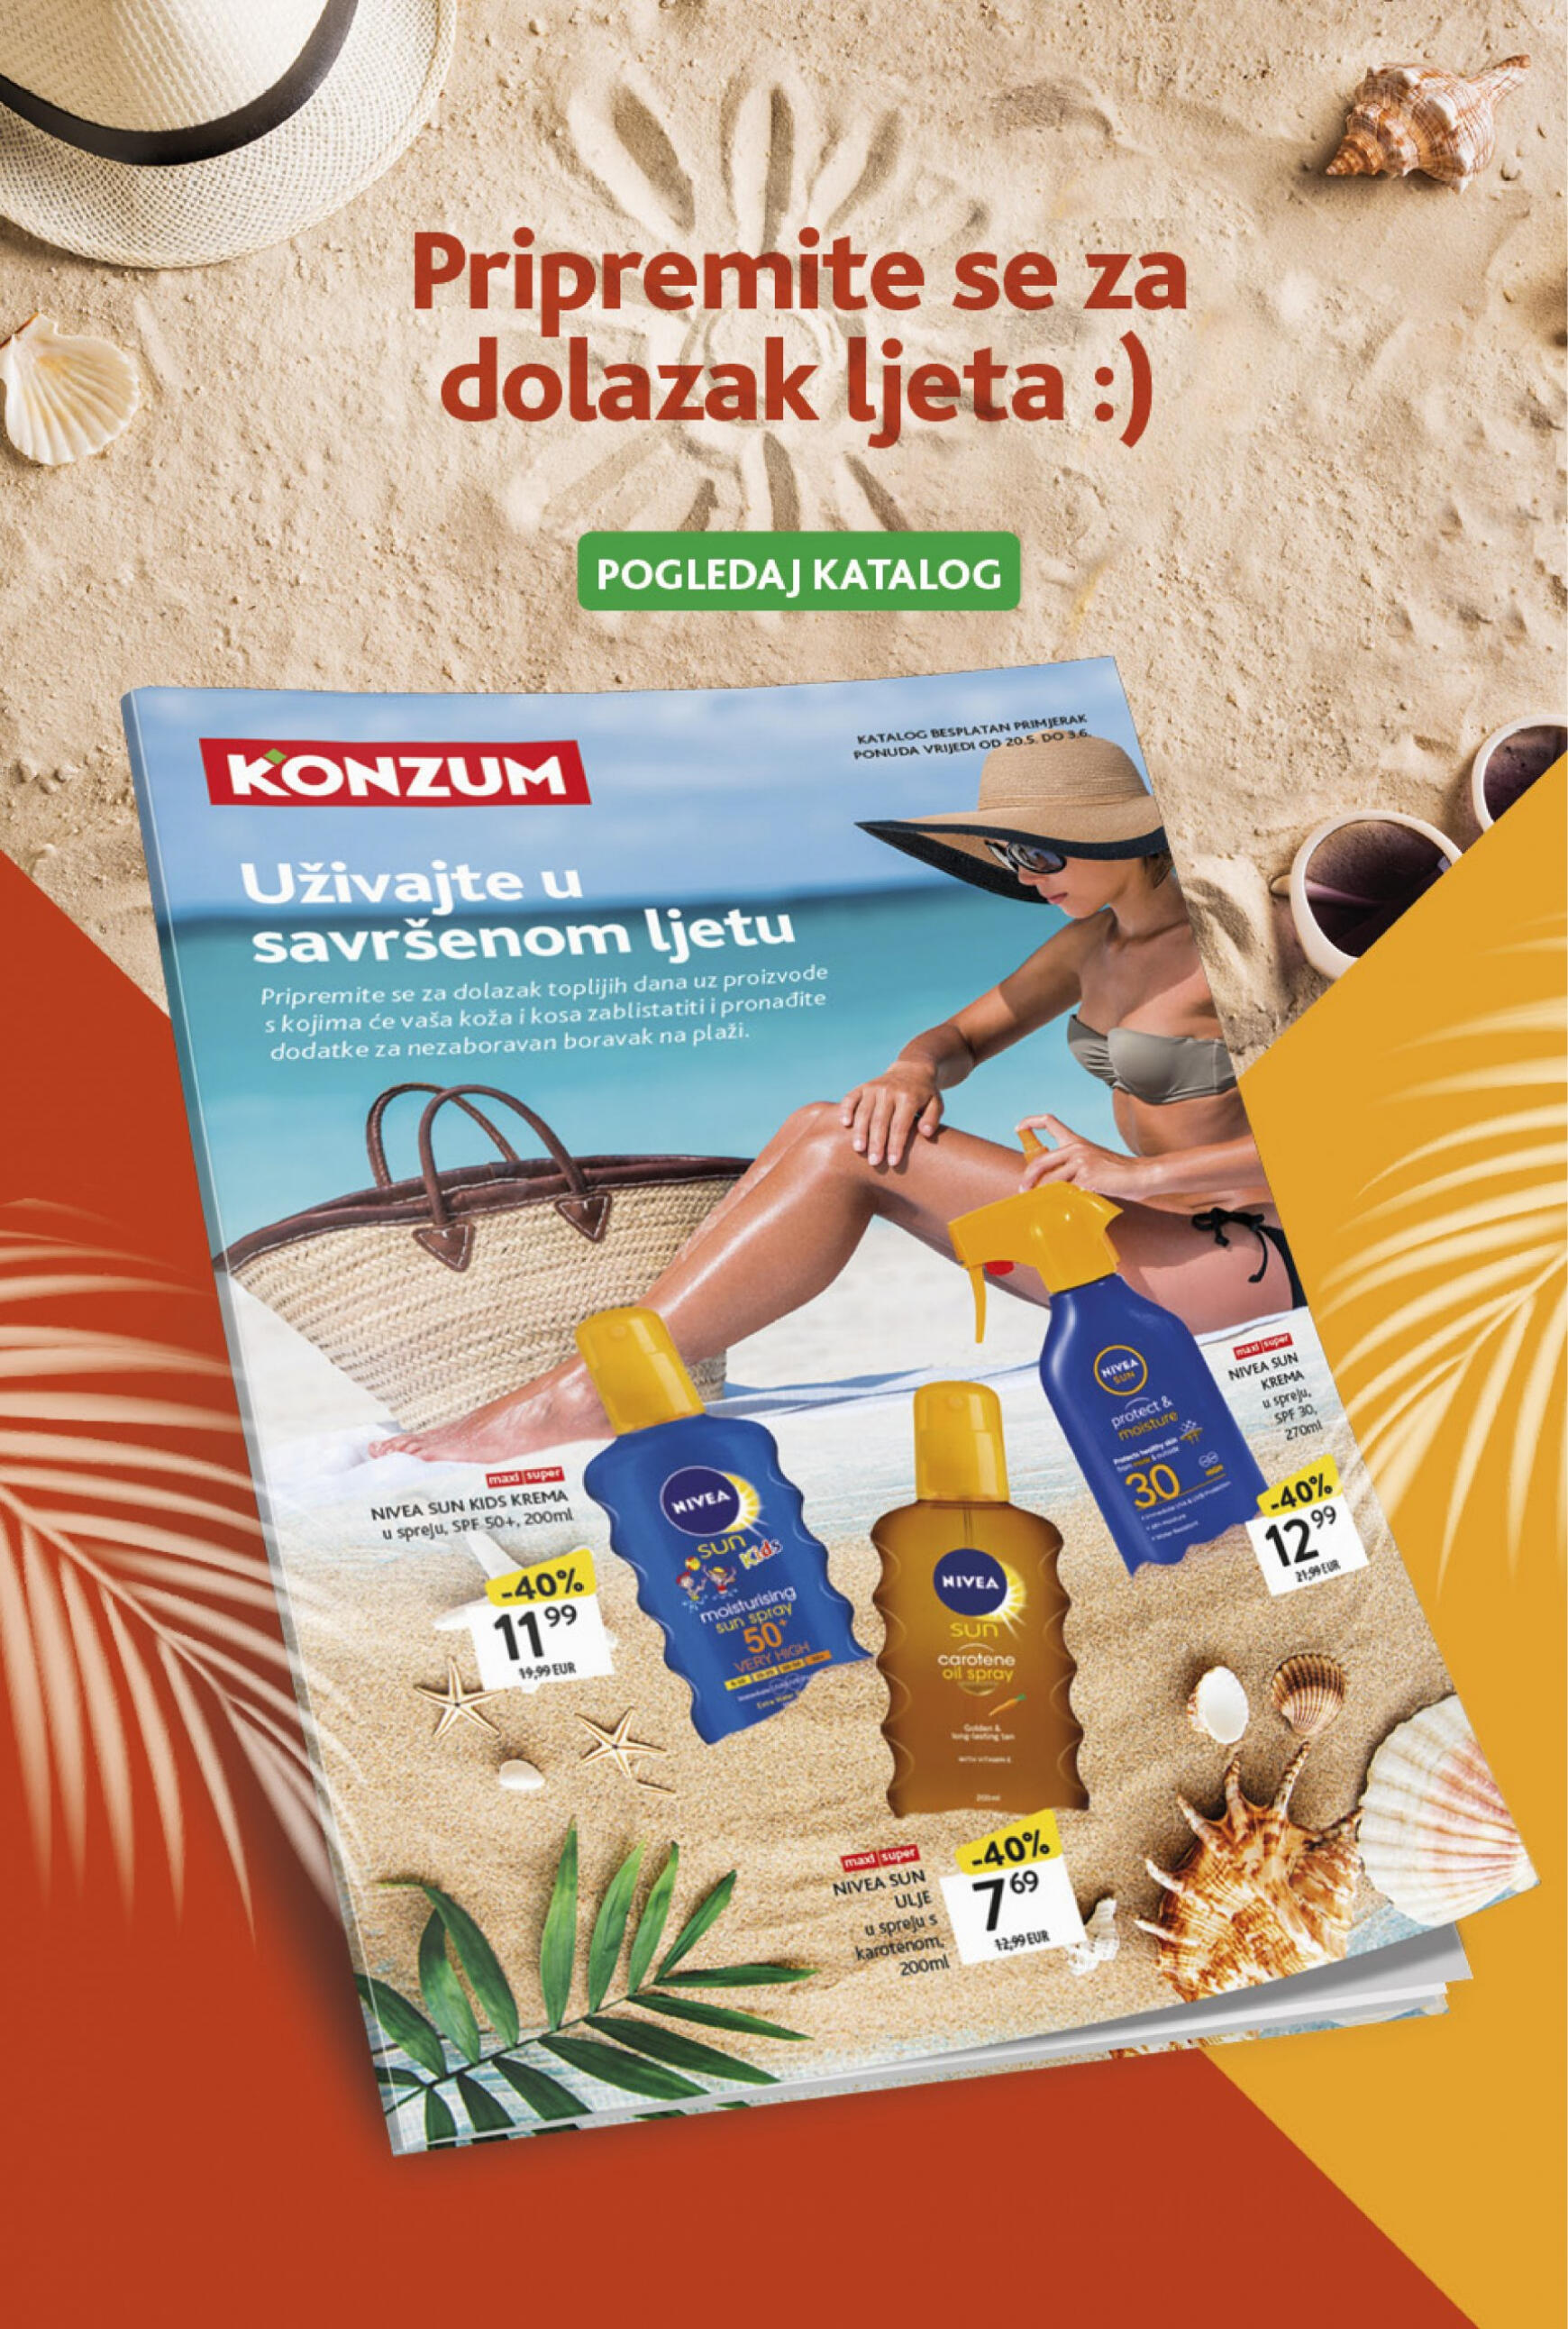 konzum - Novi katalog Konzum 29.05. - 05.06. - page: 43